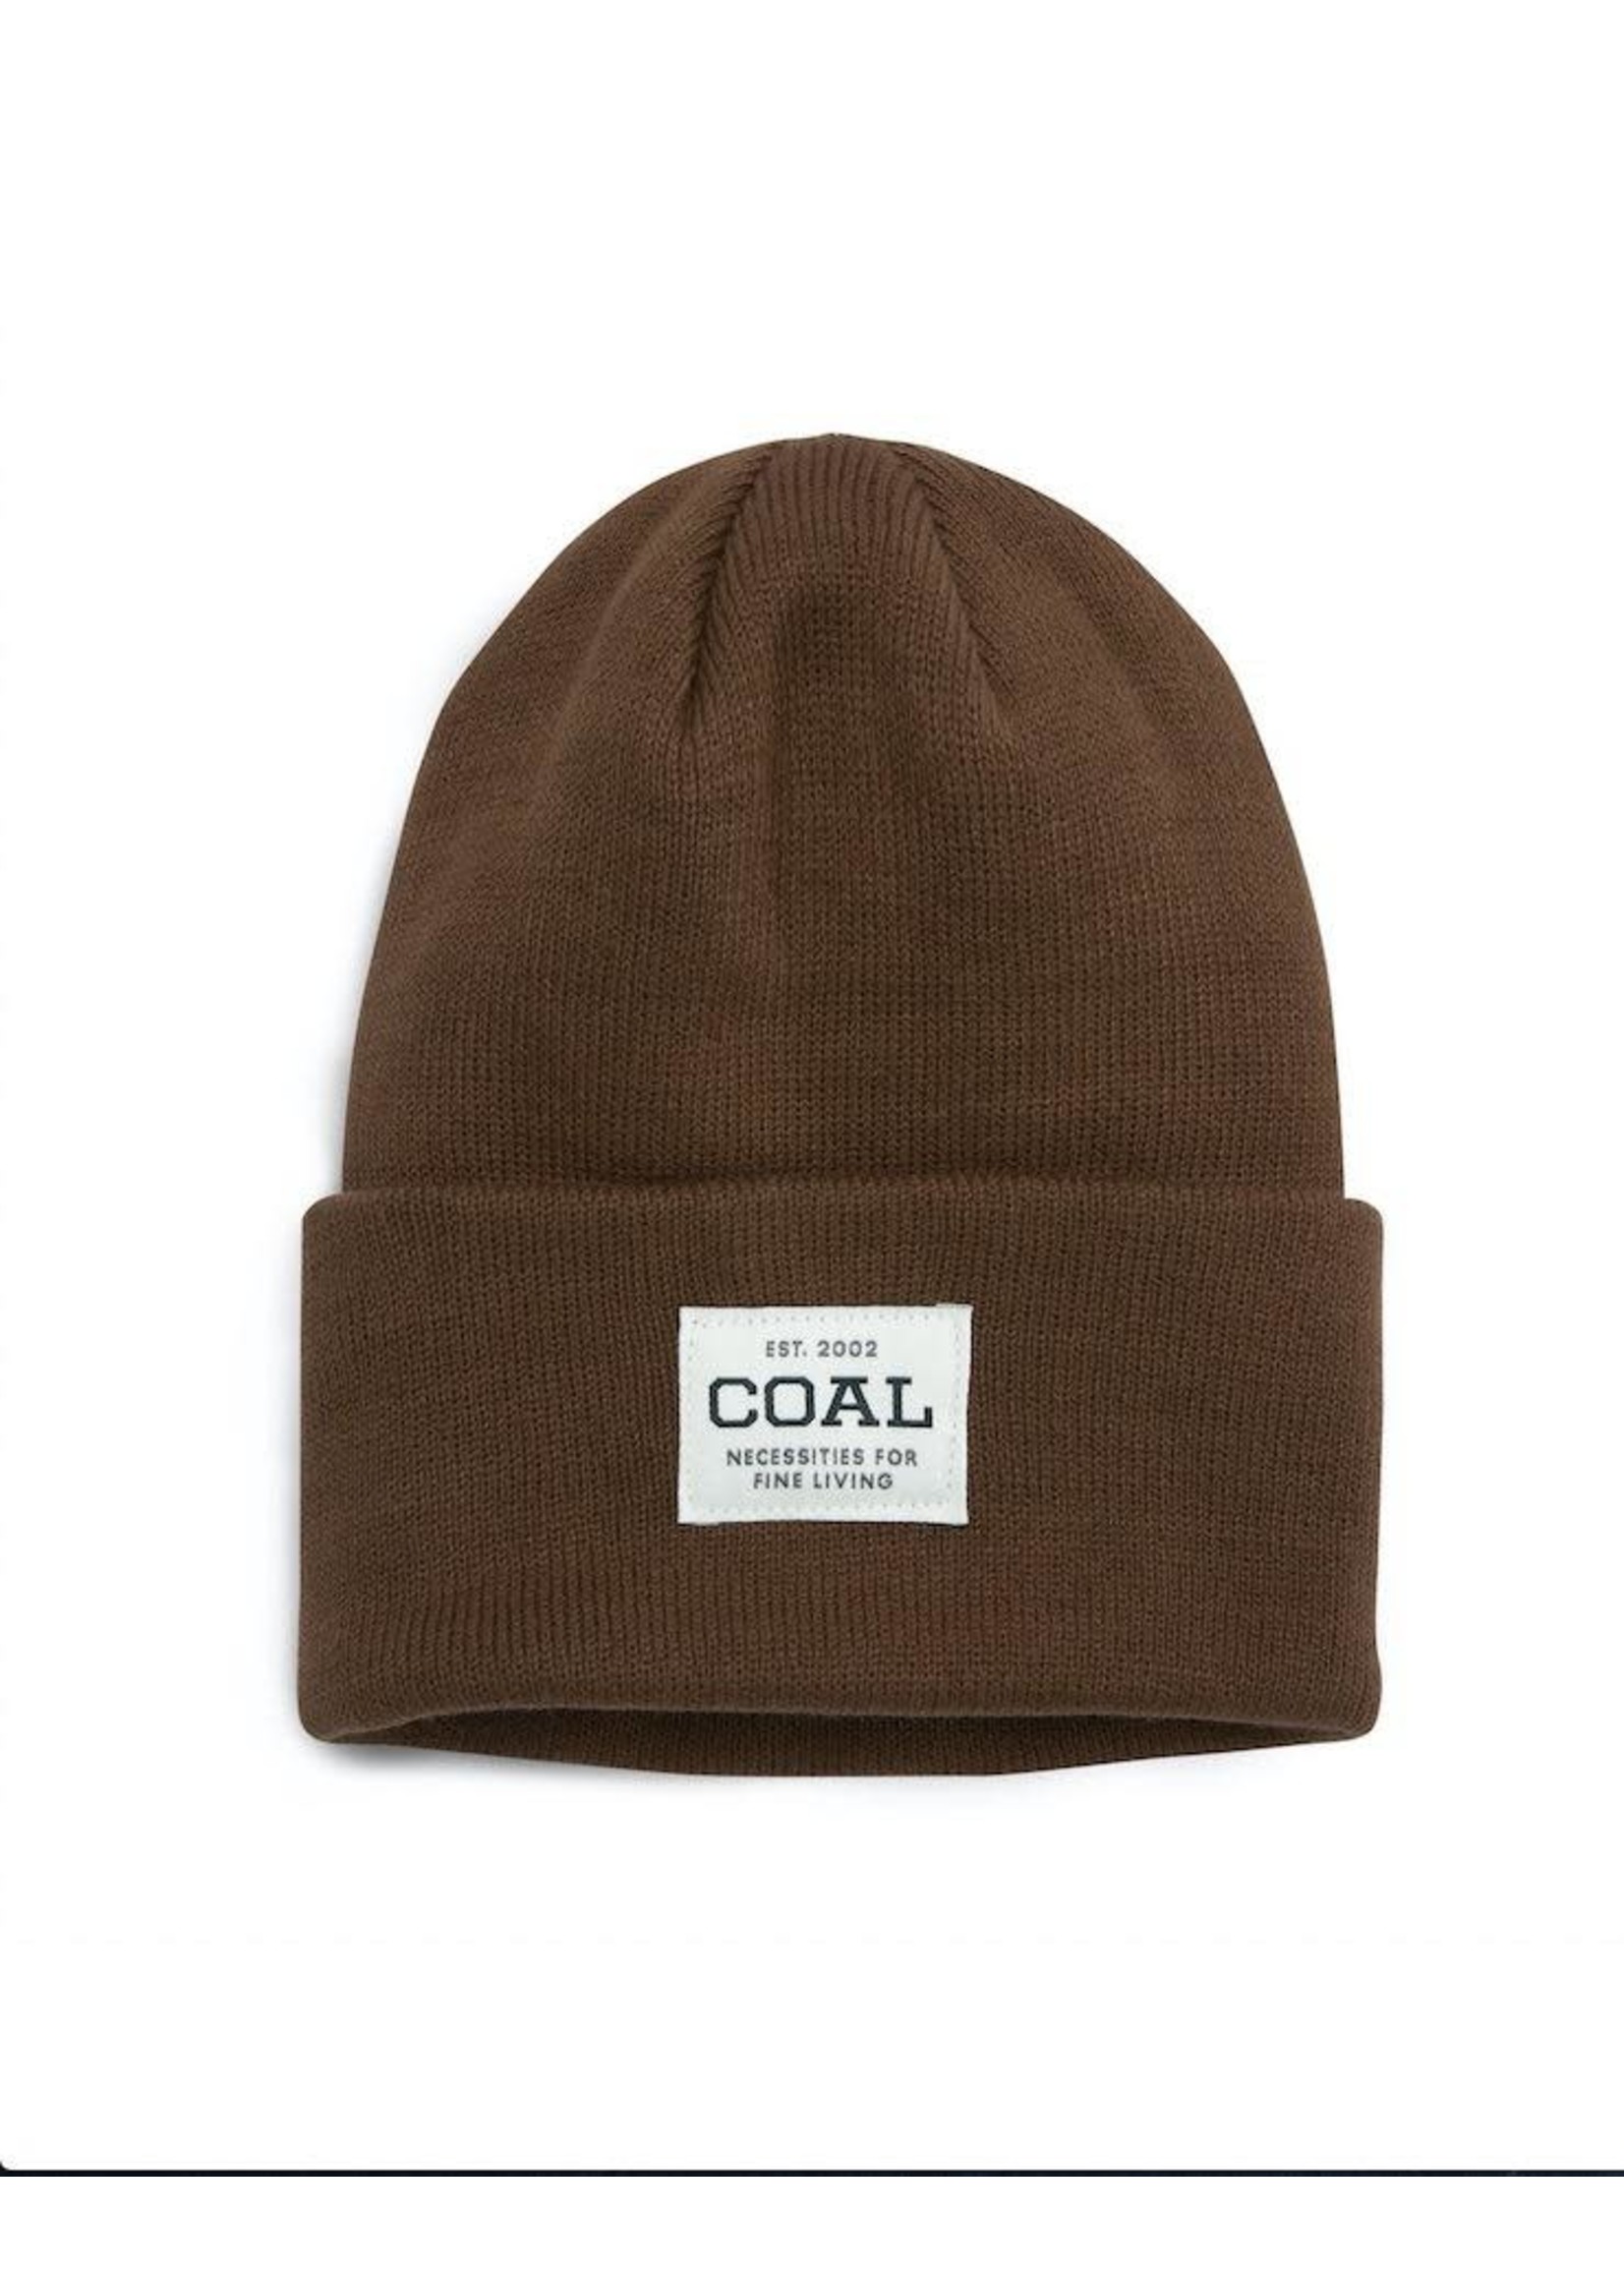 Coal Coal Headwear, The Uniform Knit Cuff Beanie in Light Brown